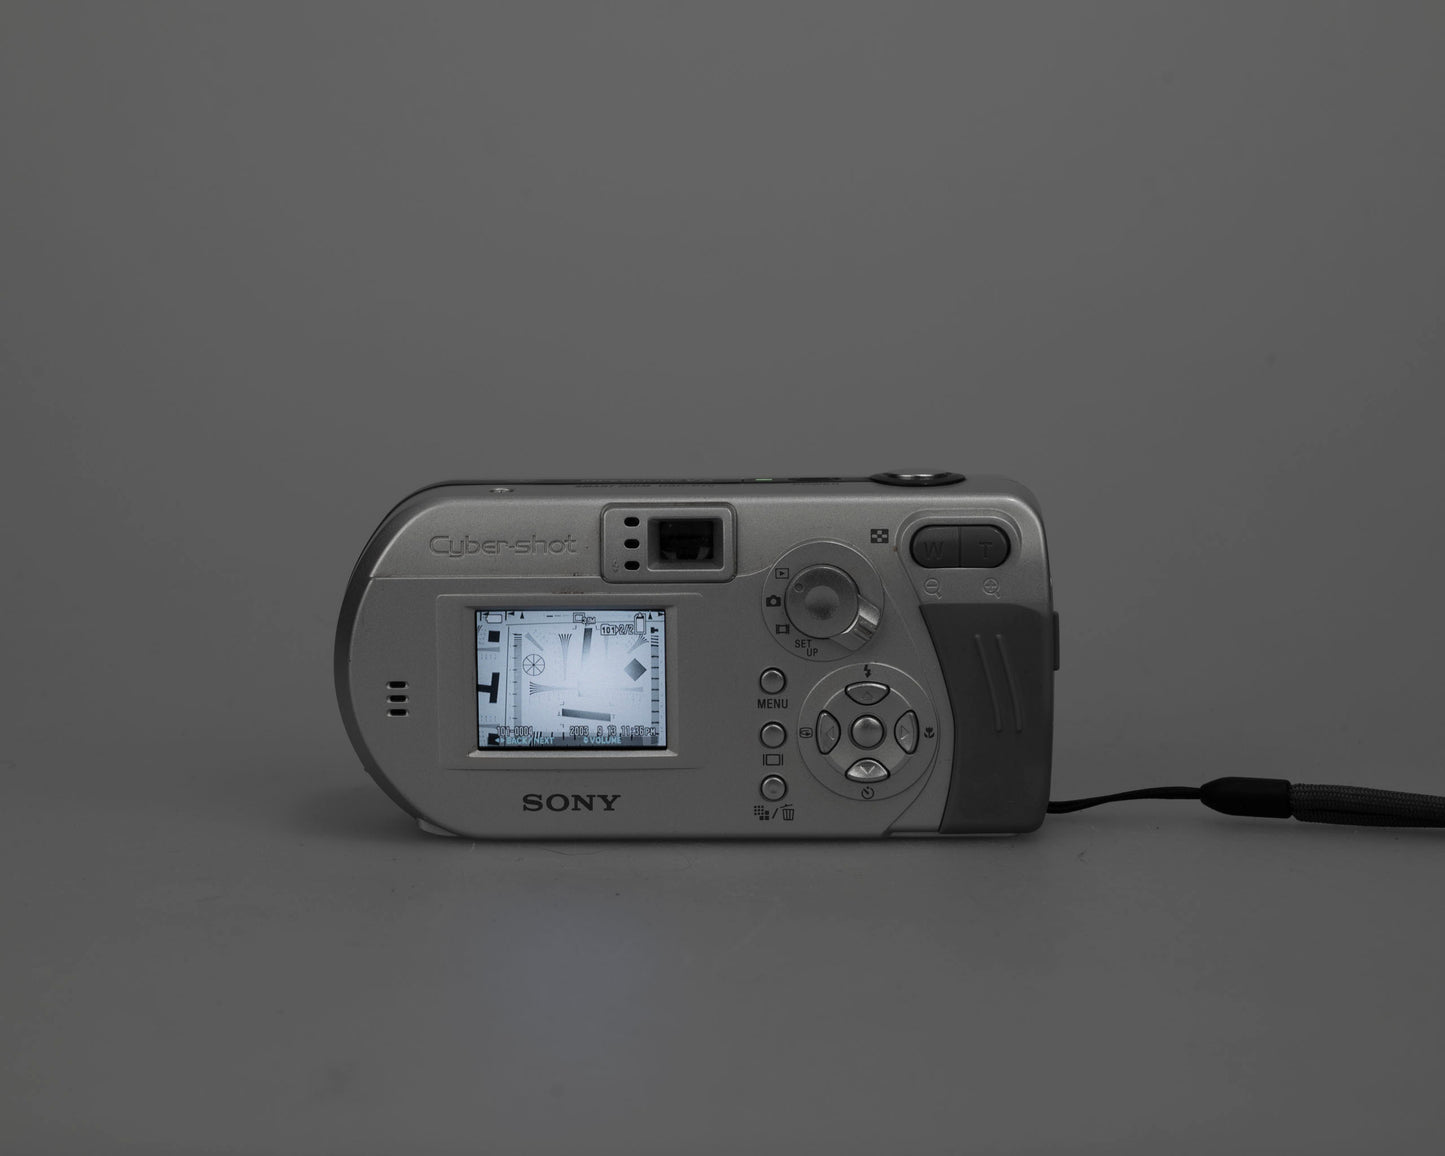 Sony Cyber-Shot DSC-P72 3.1 MP CCD sensor digicam w/ 16MB Memory Stick card + original case (uses AA batteries)